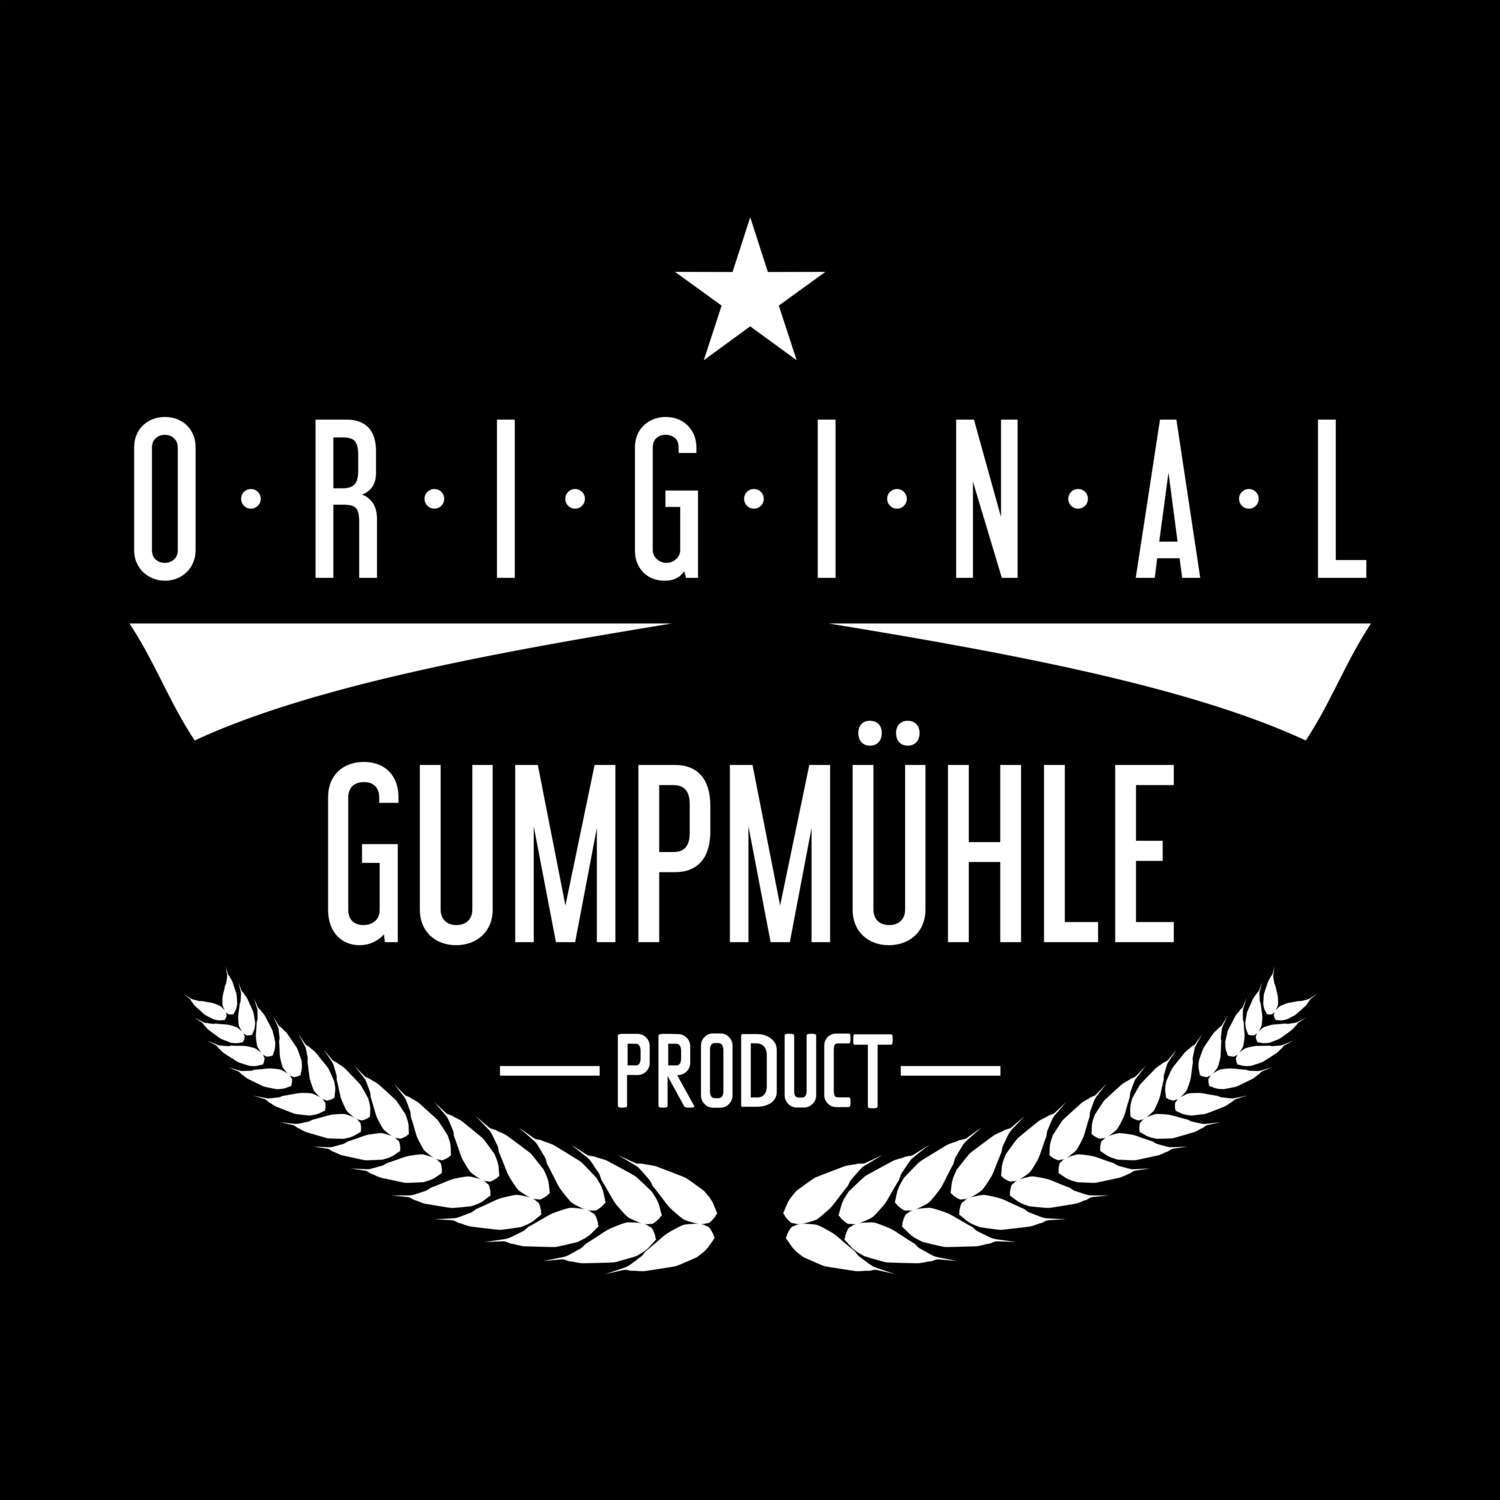 Gumpmühle T-Shirt »Original Product«